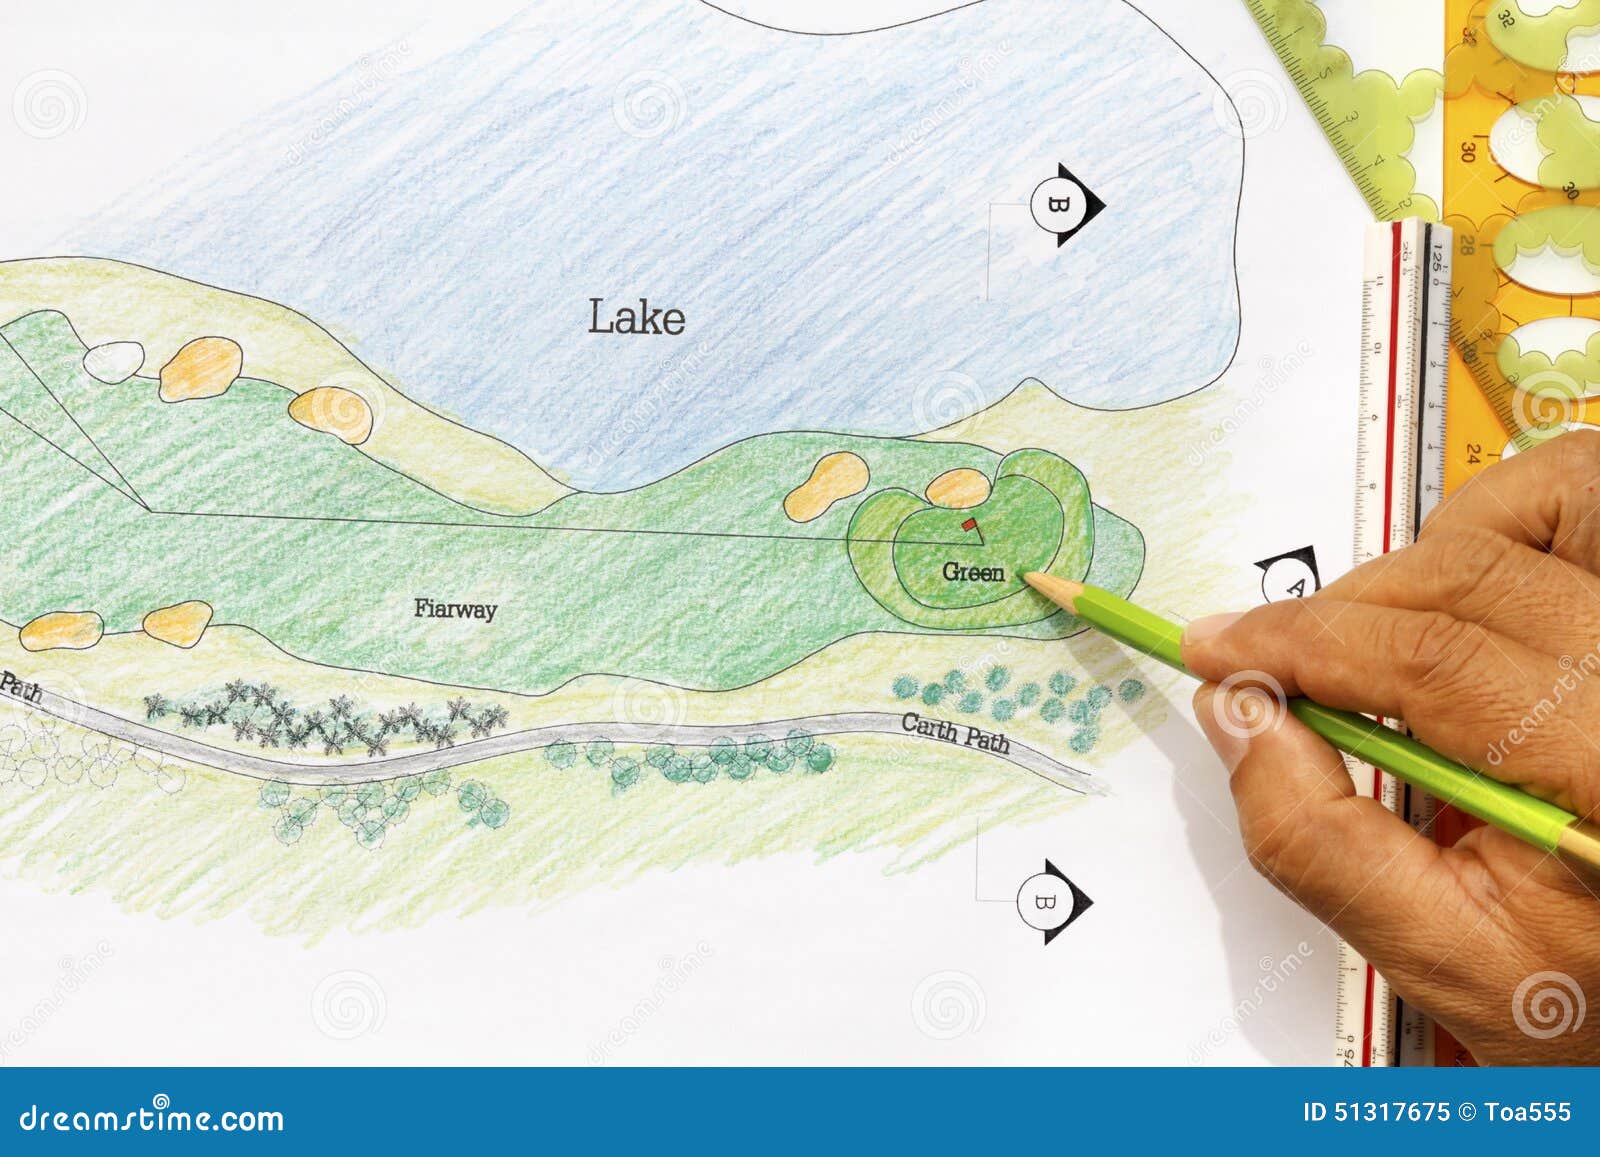 Architect Design Golf Course Plan. Stock Photo - Image: 51317675